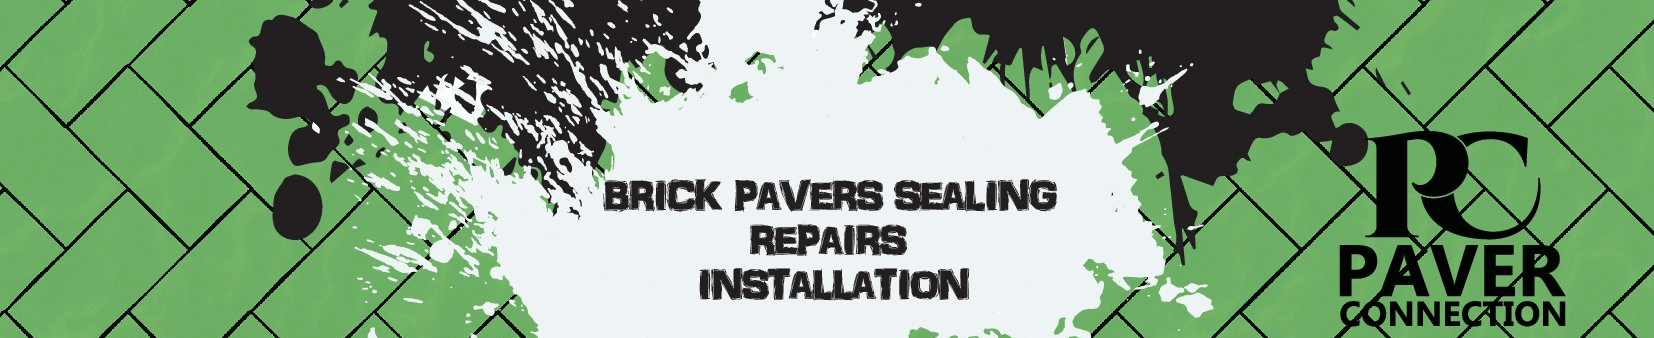 Brick paver sealing installation